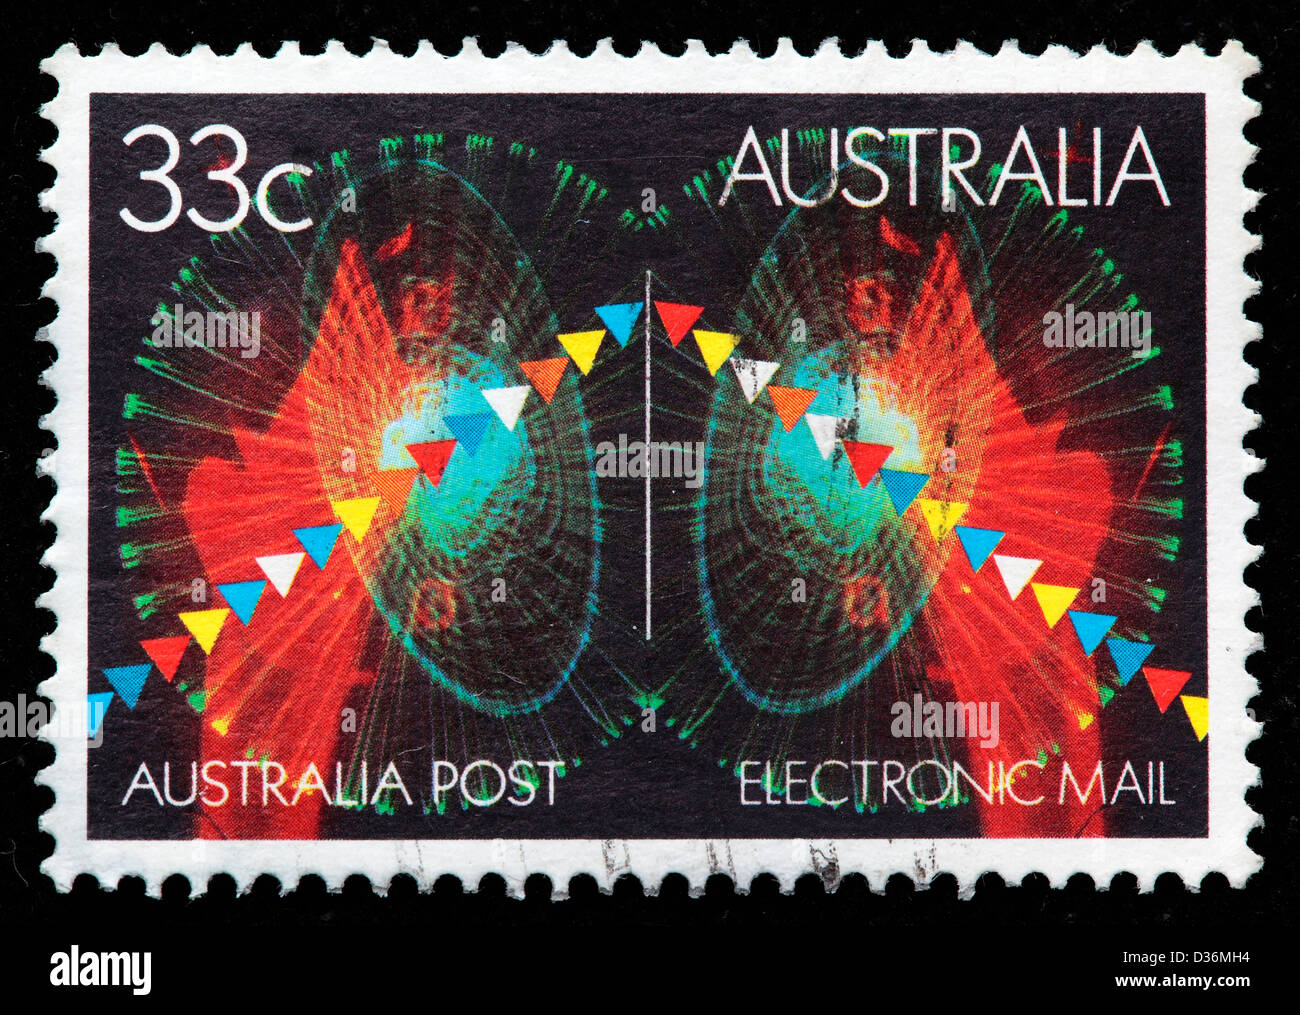 Elektronische Post, Briefmarke, Australien, 1985 Stockfoto